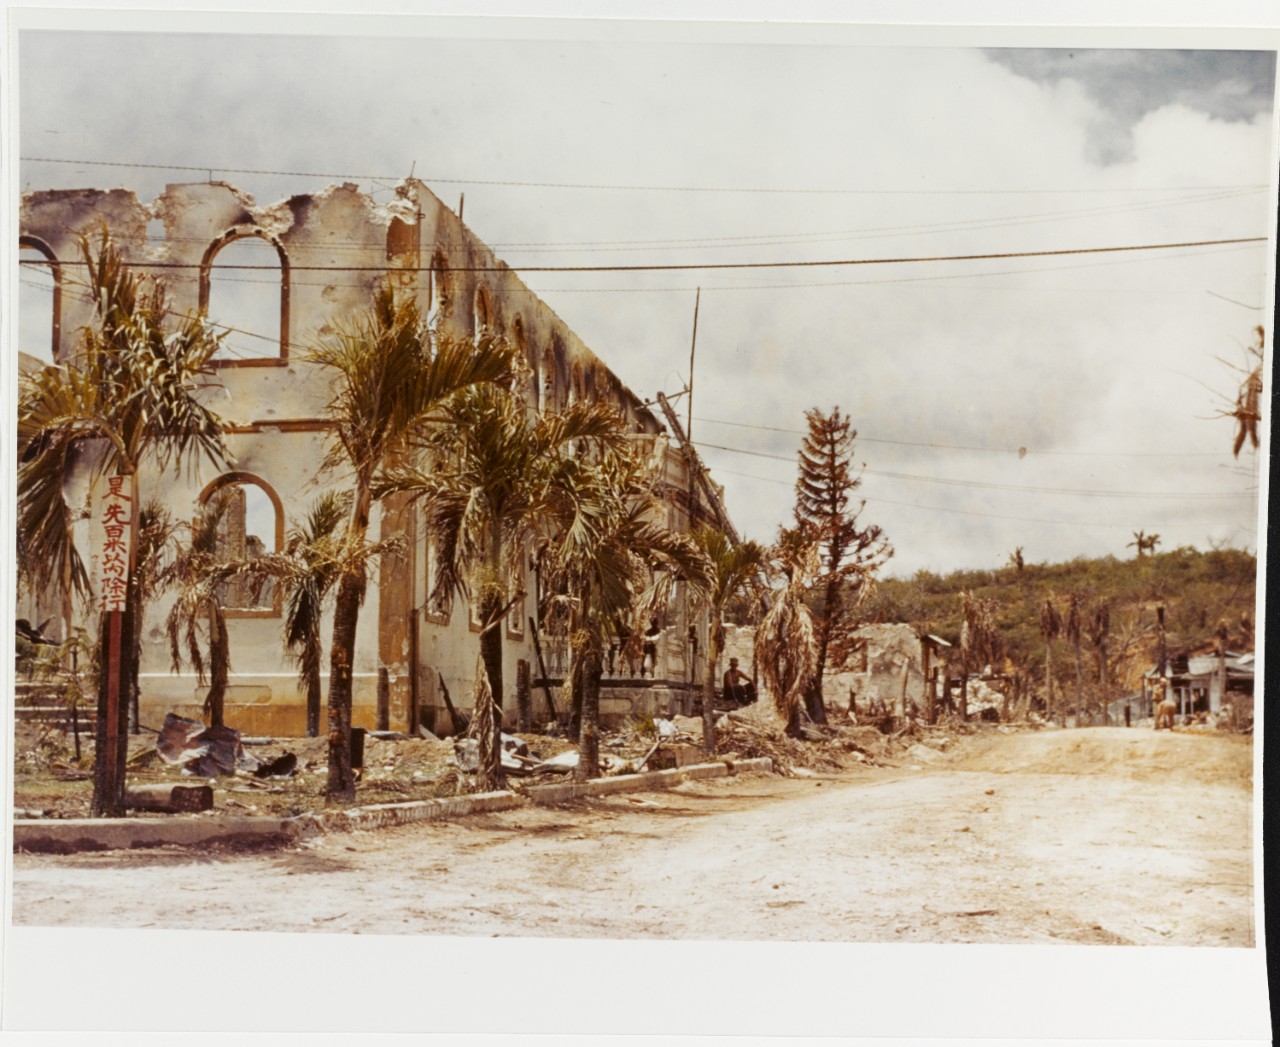 Agana, Guam, 1944